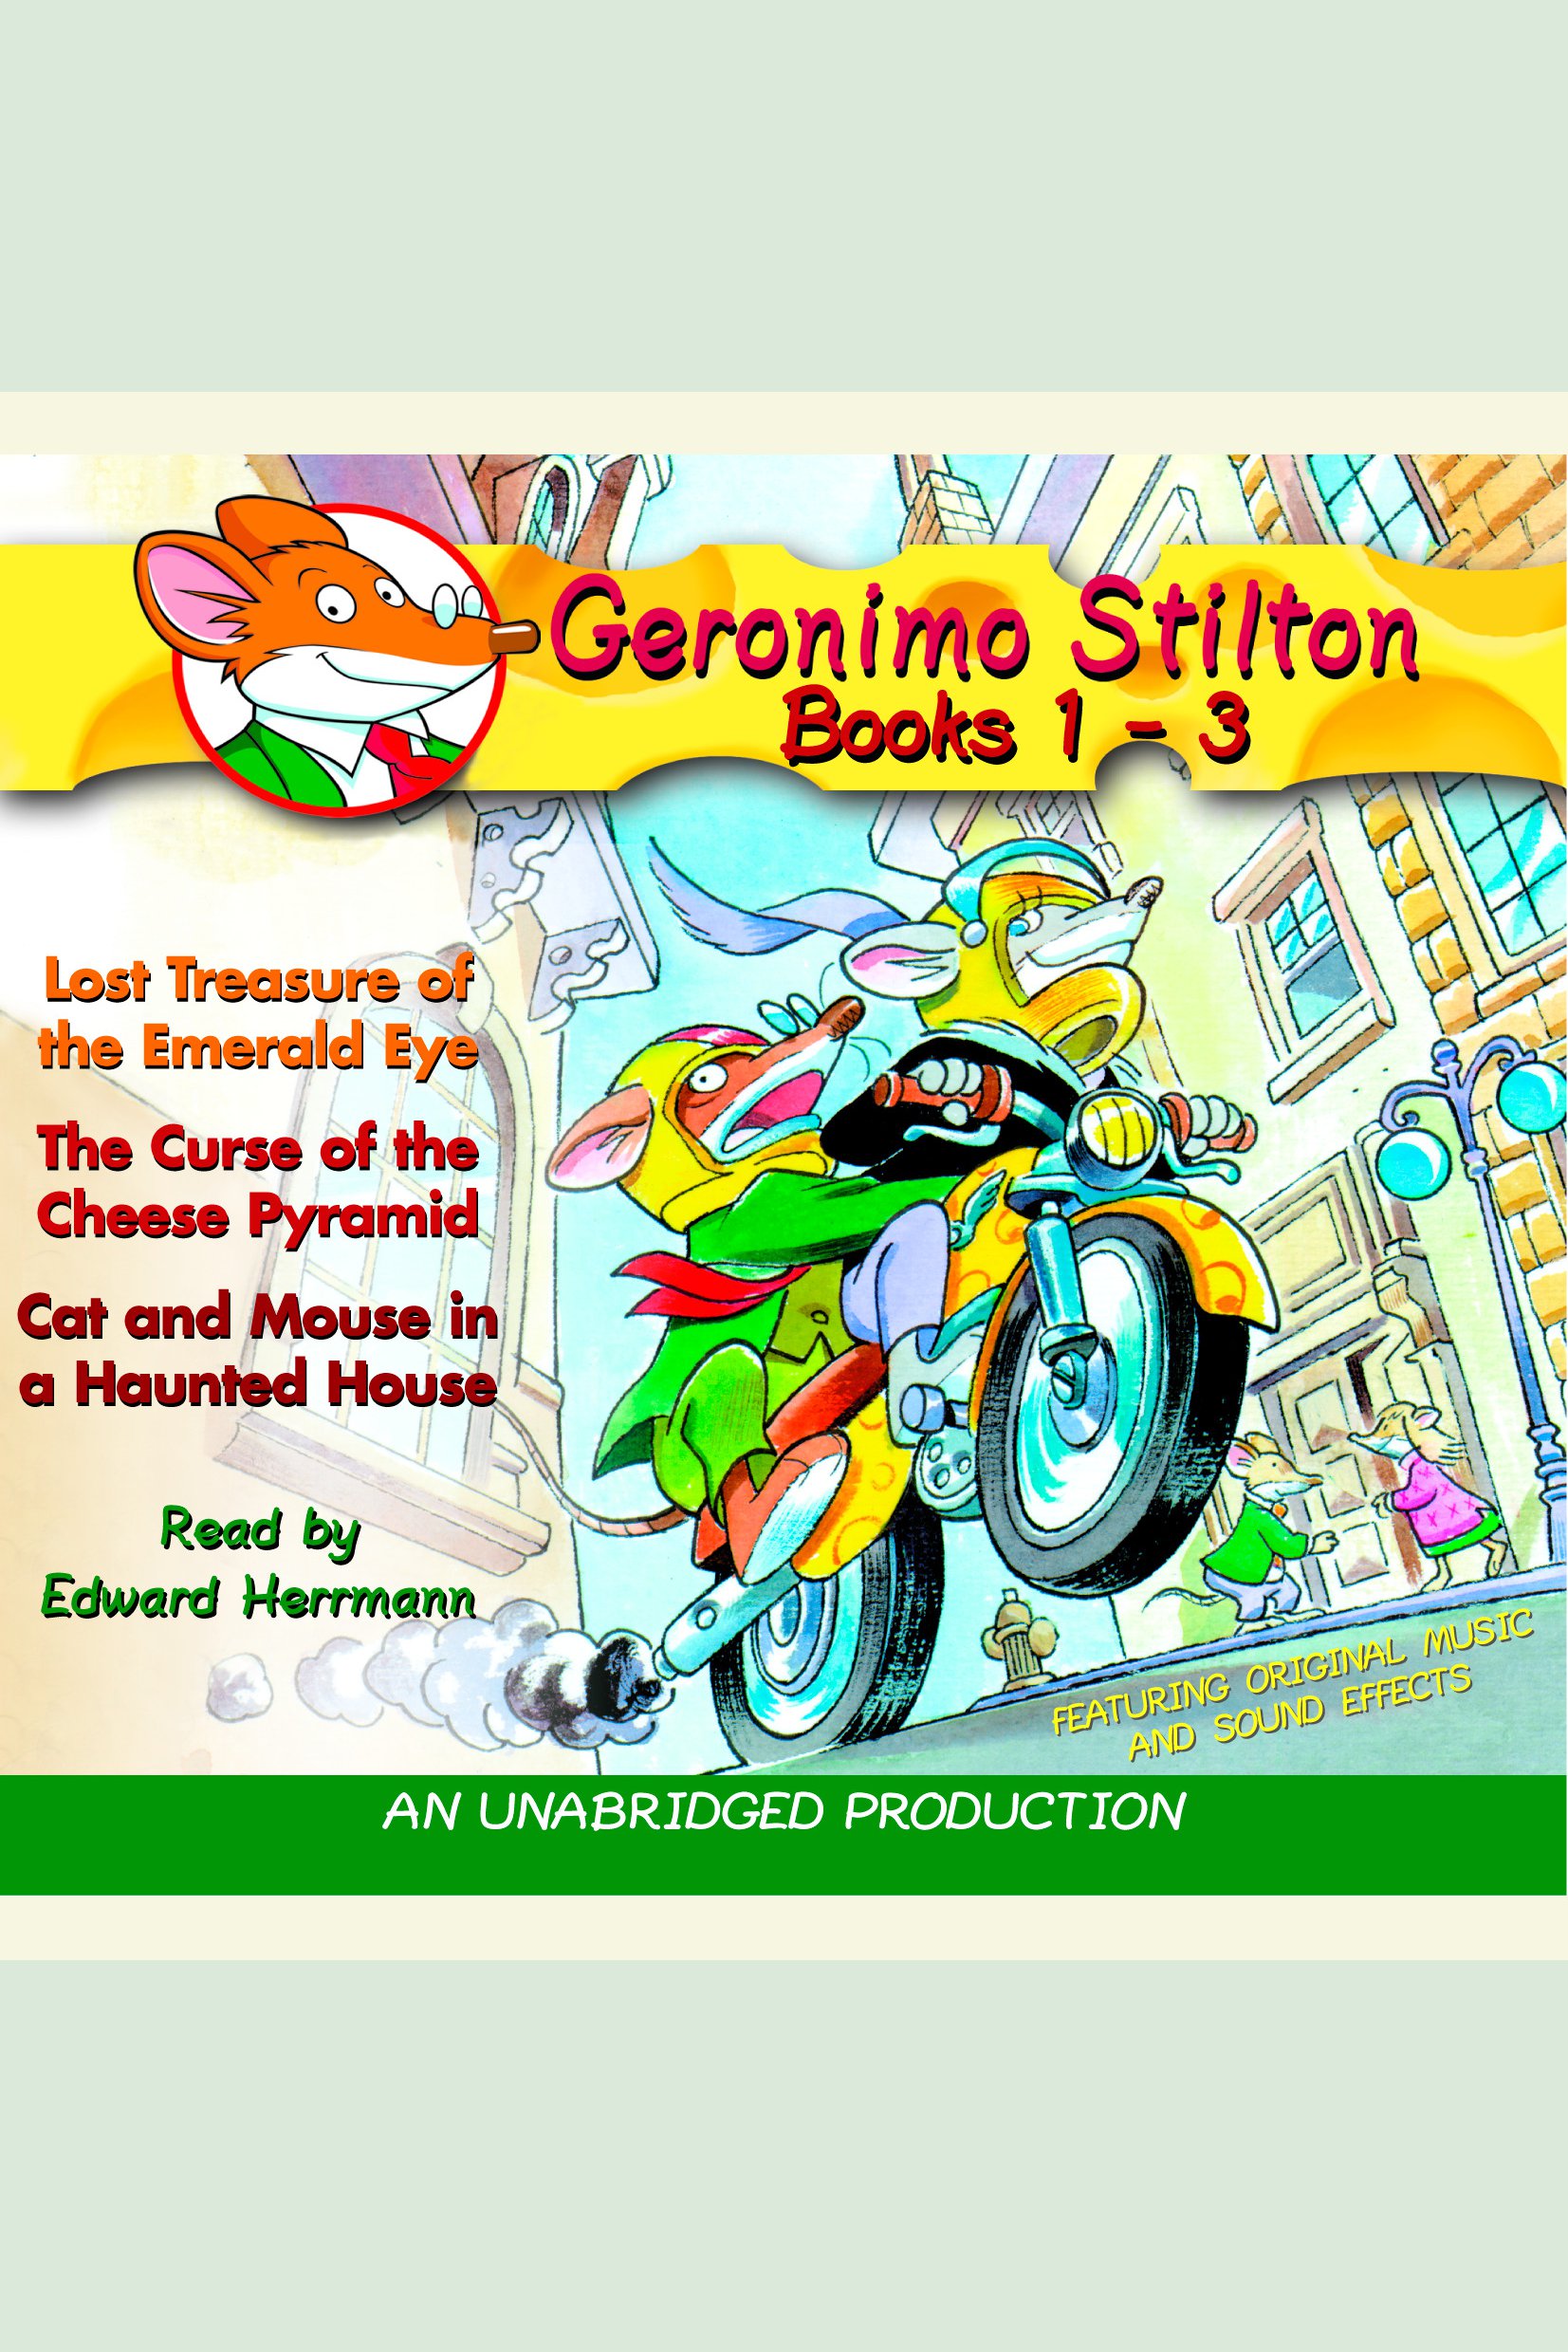 Geronimo Stilton cover image